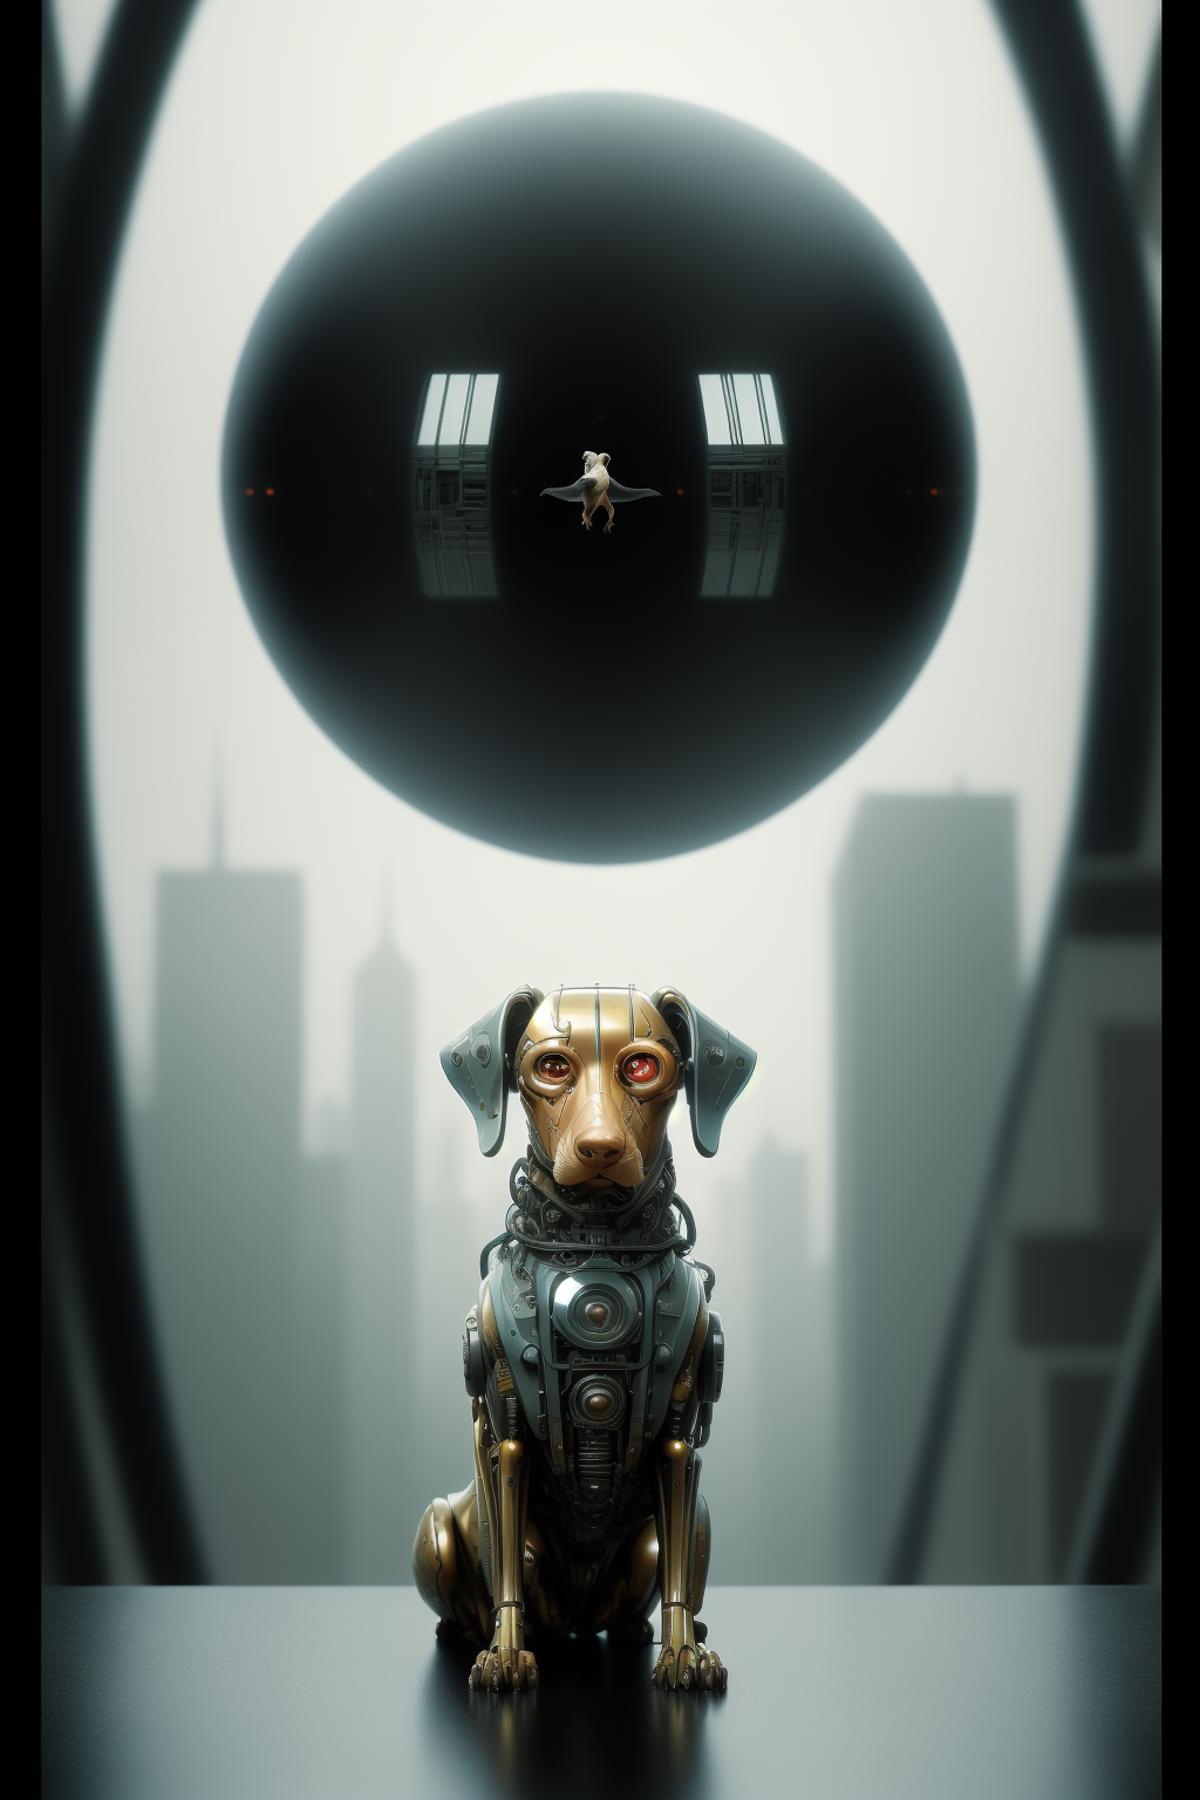 mechanical dog image by InfiniteLight